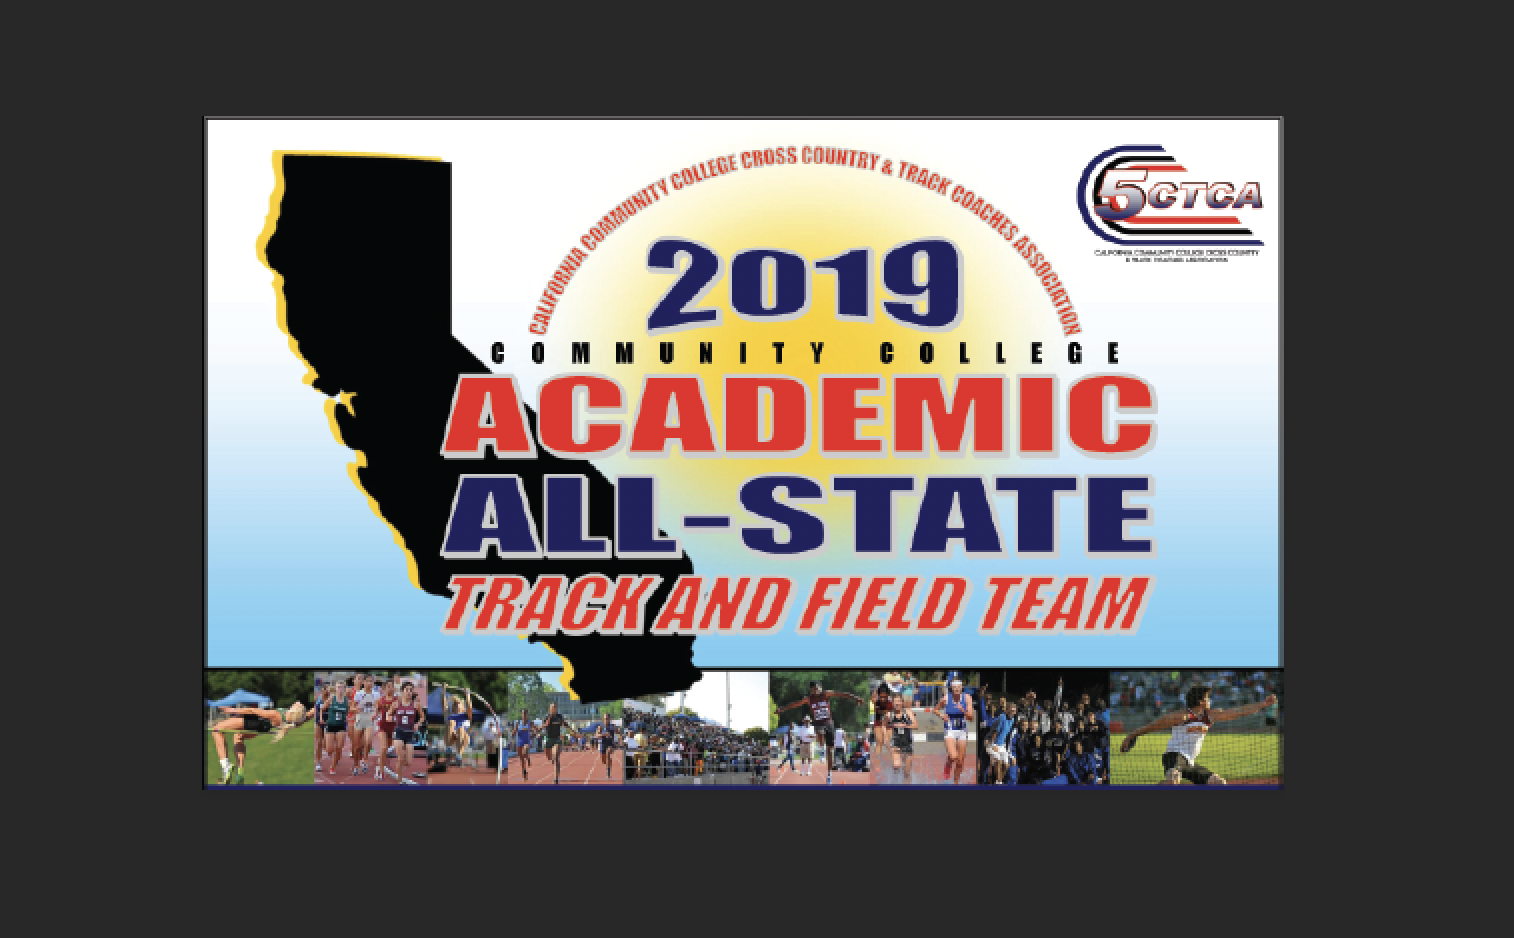 5CTCA 2019 Academic All-State logo.